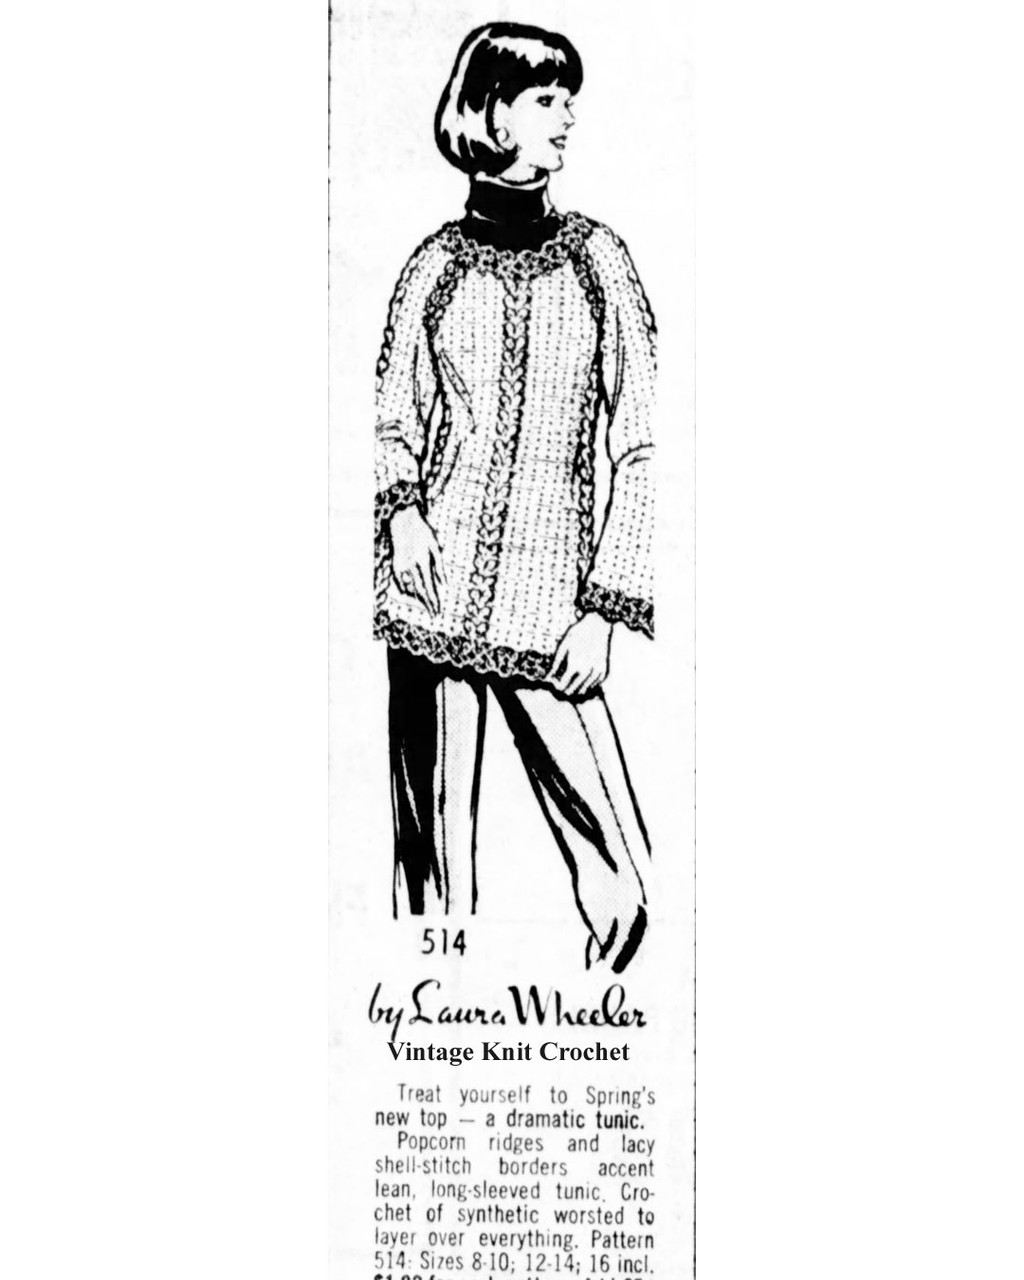 Mail Order Design 514 Crocheted Tunic Pattern newspaper advertisement